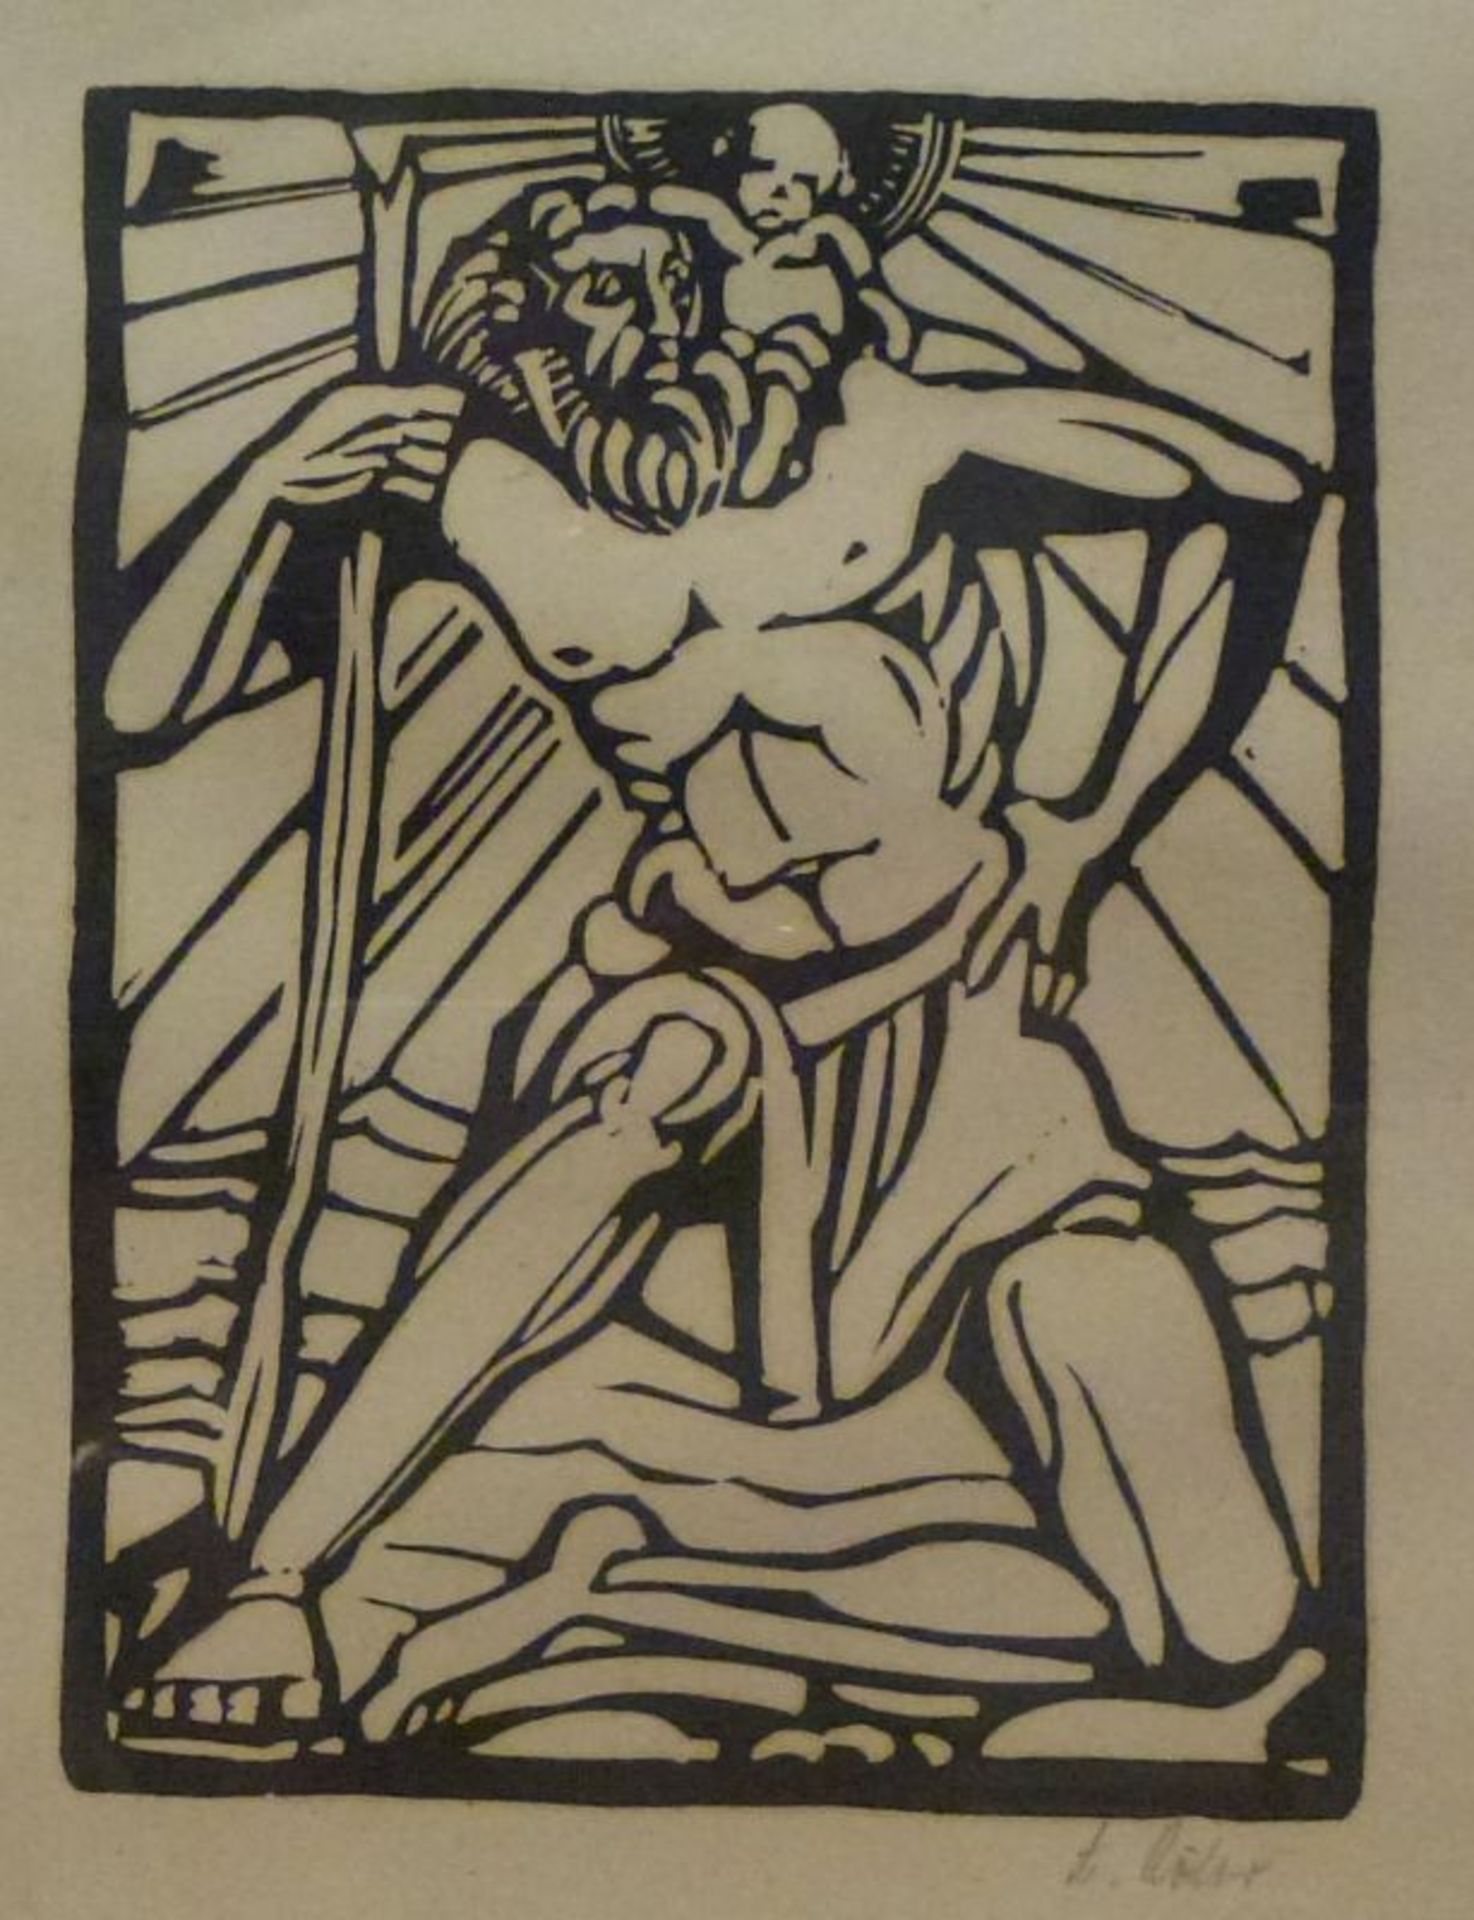 ChristopherusChristopherusAloys Röhr (1887-1953) Holzschnitt, Bleistiftsign., 50x40 cm, unter Gl.